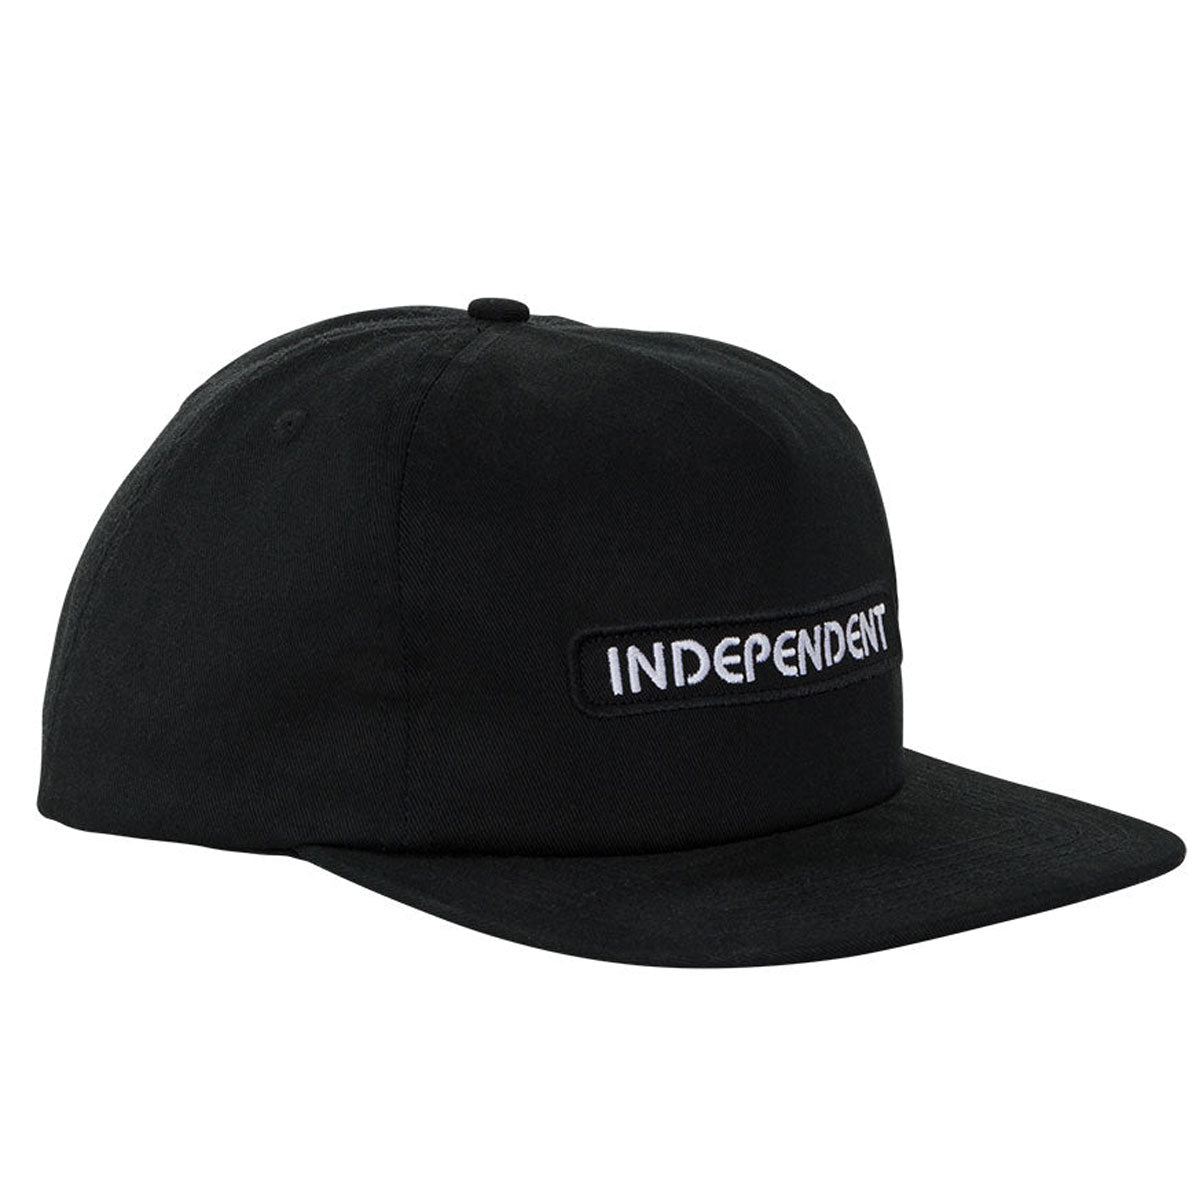 Independent B/C Groundwork Snapback Hat - Black image 3